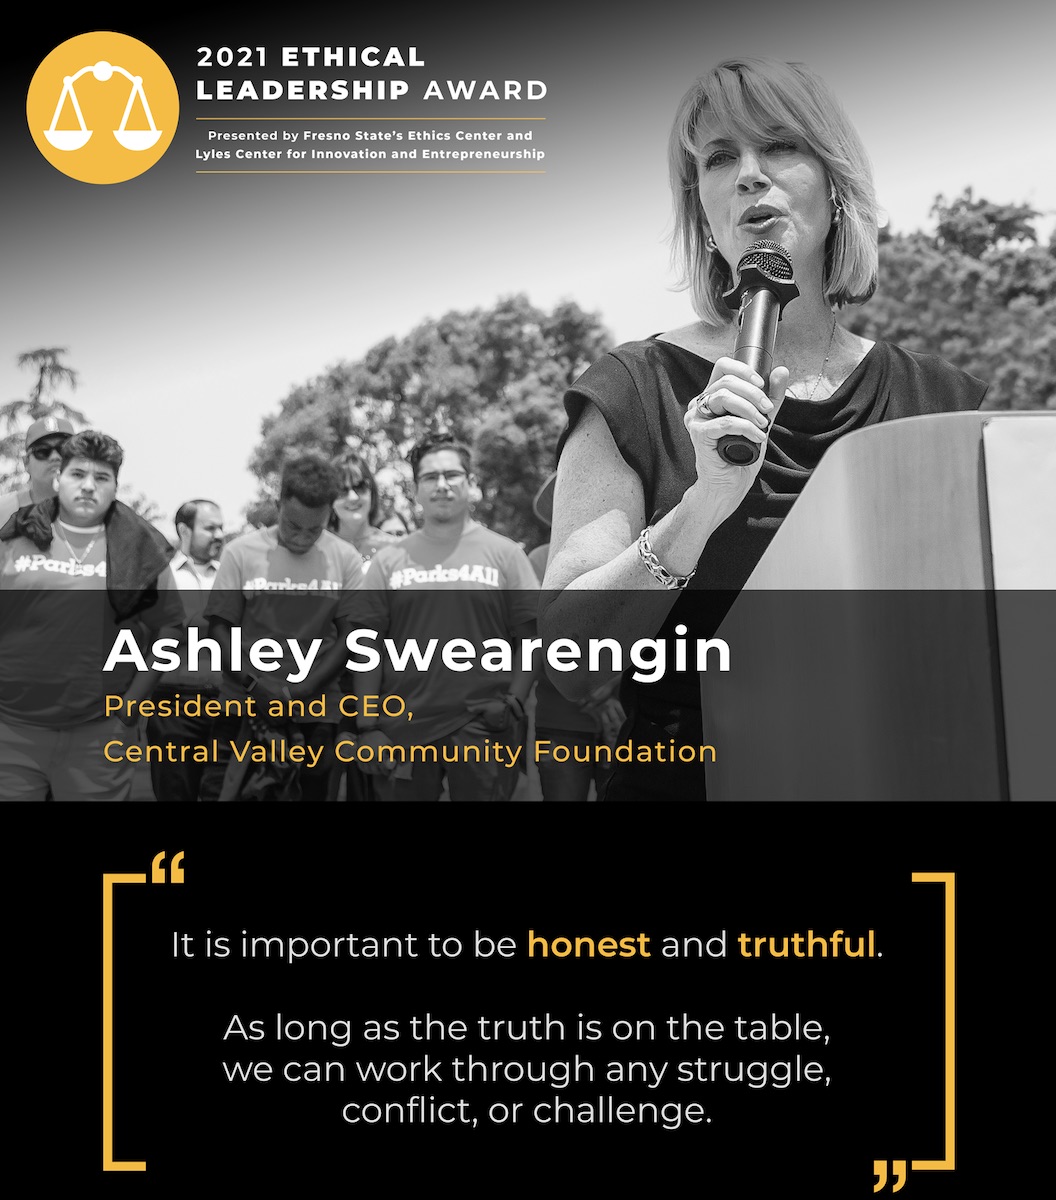 Ashley Swearengin 2021 Ethical Leadership Award